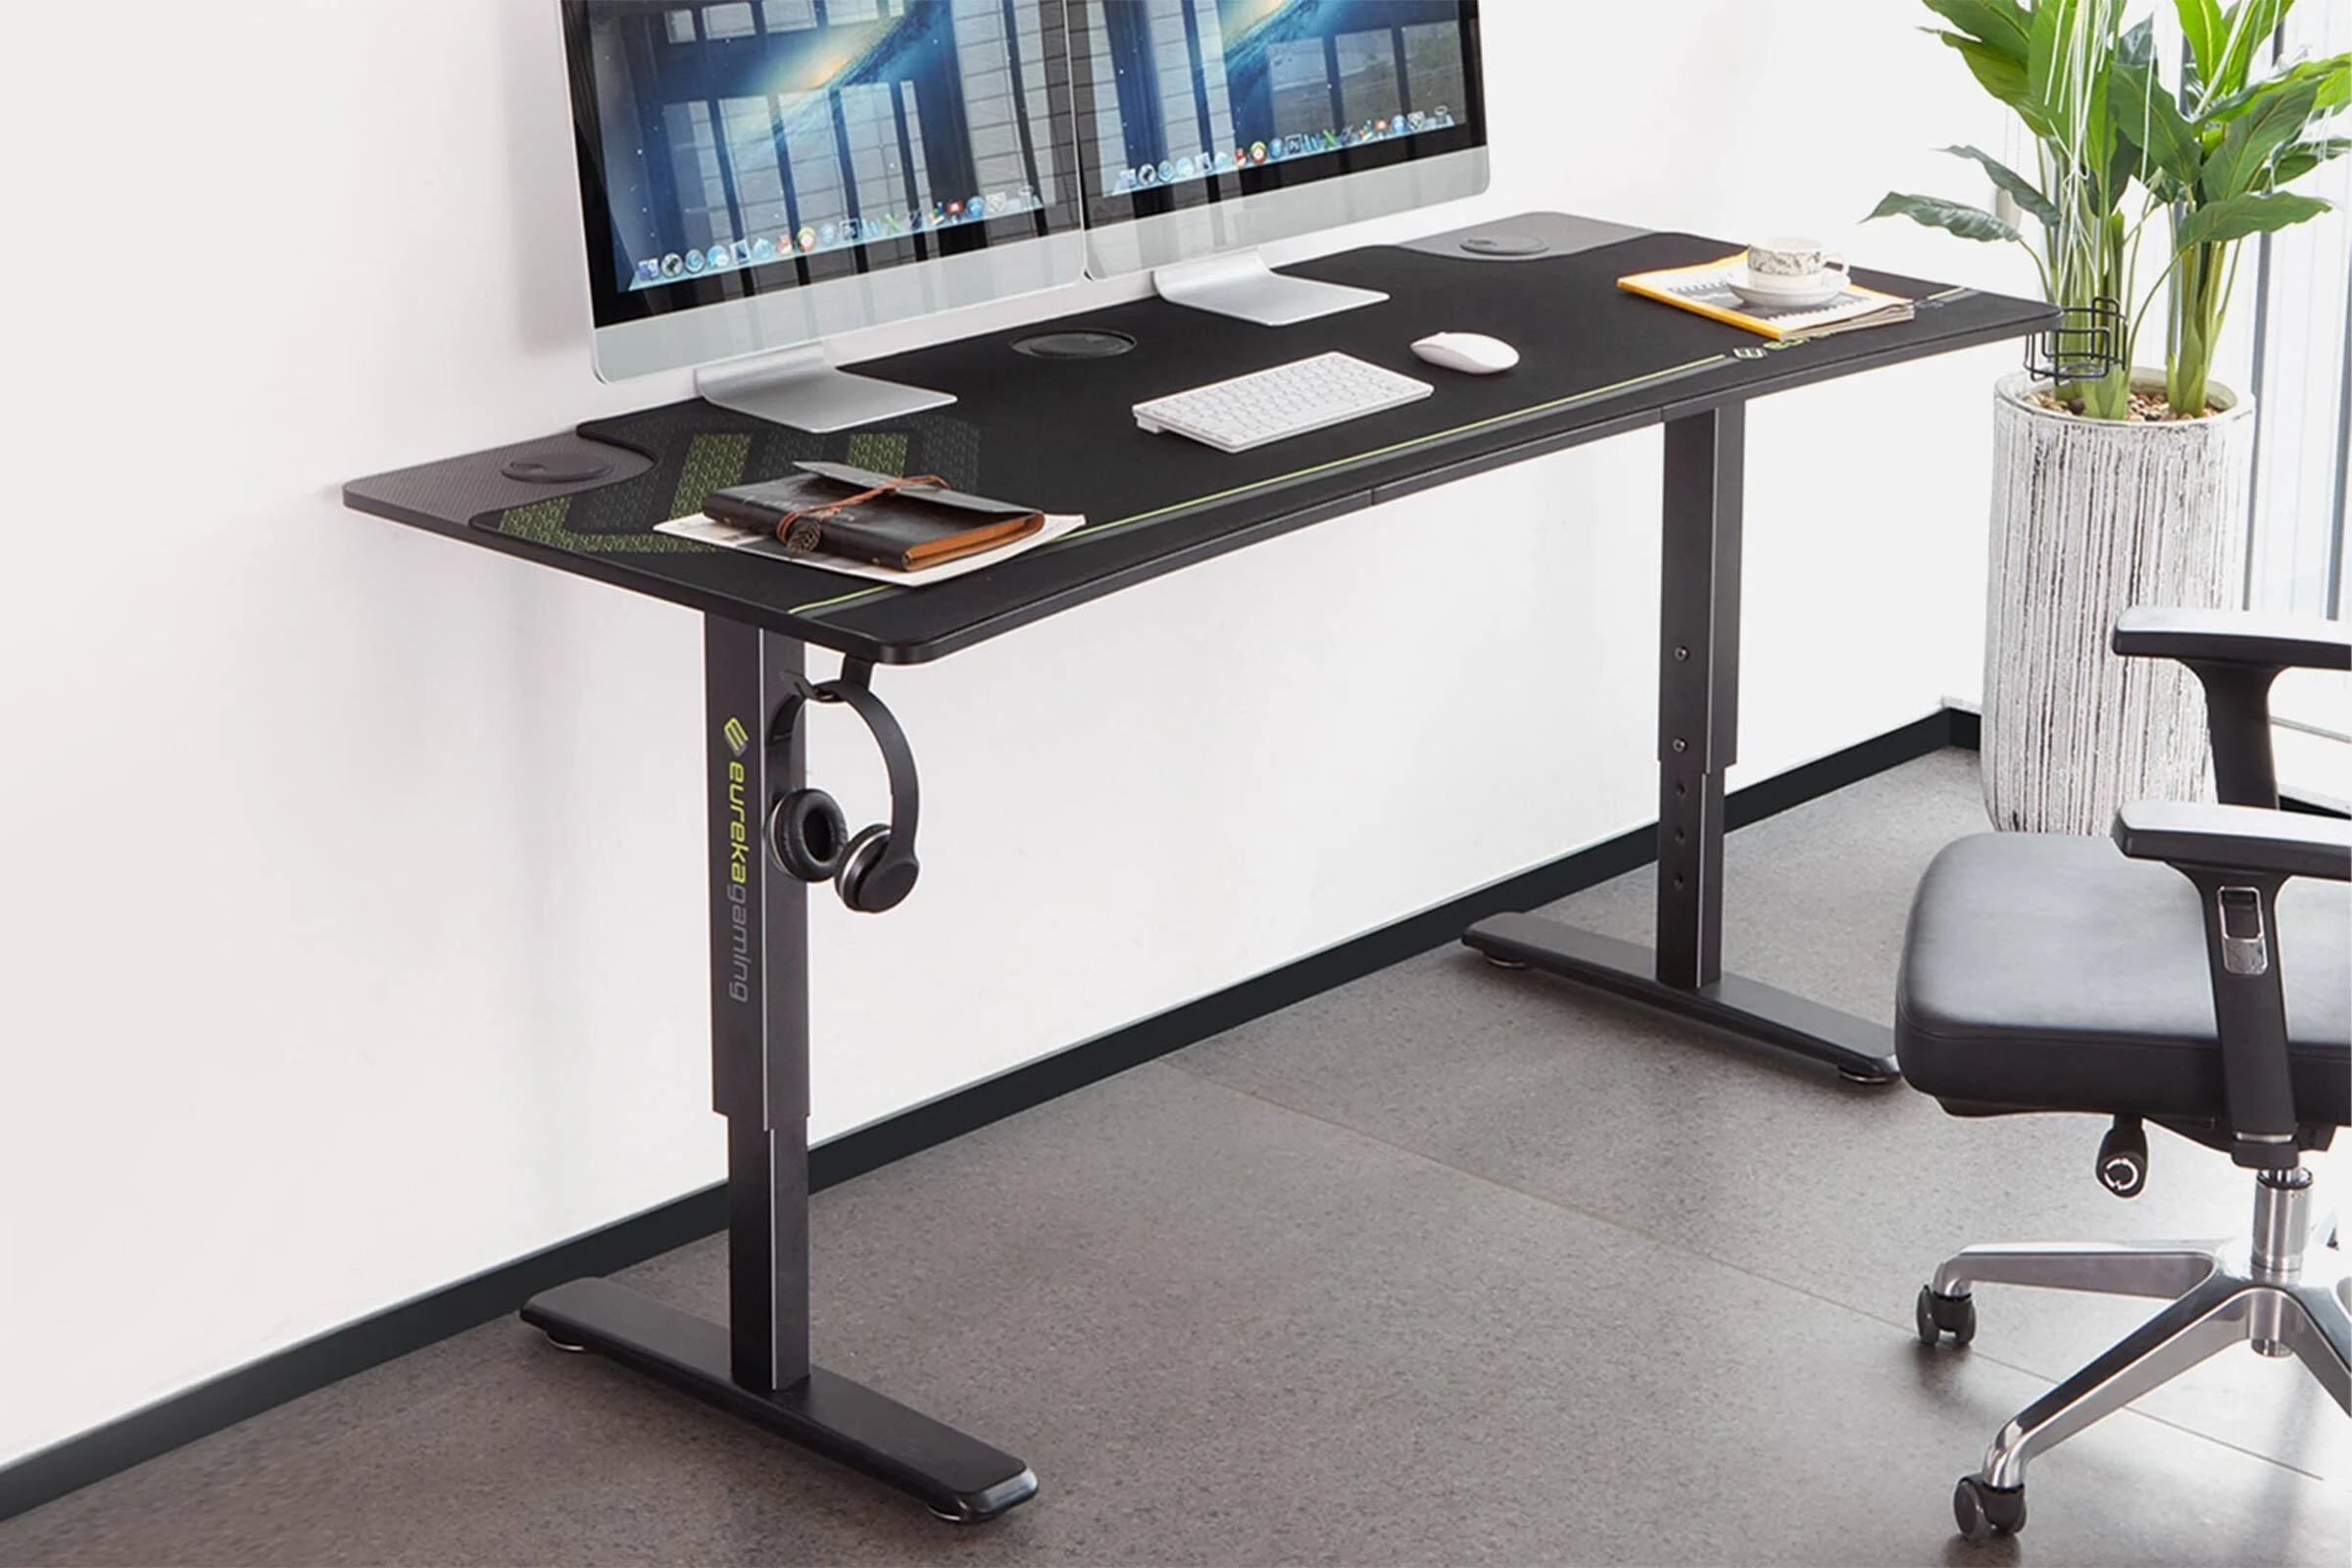 EUREKA IM63 Curved Desk: Additional Storage & Manual Height Settings